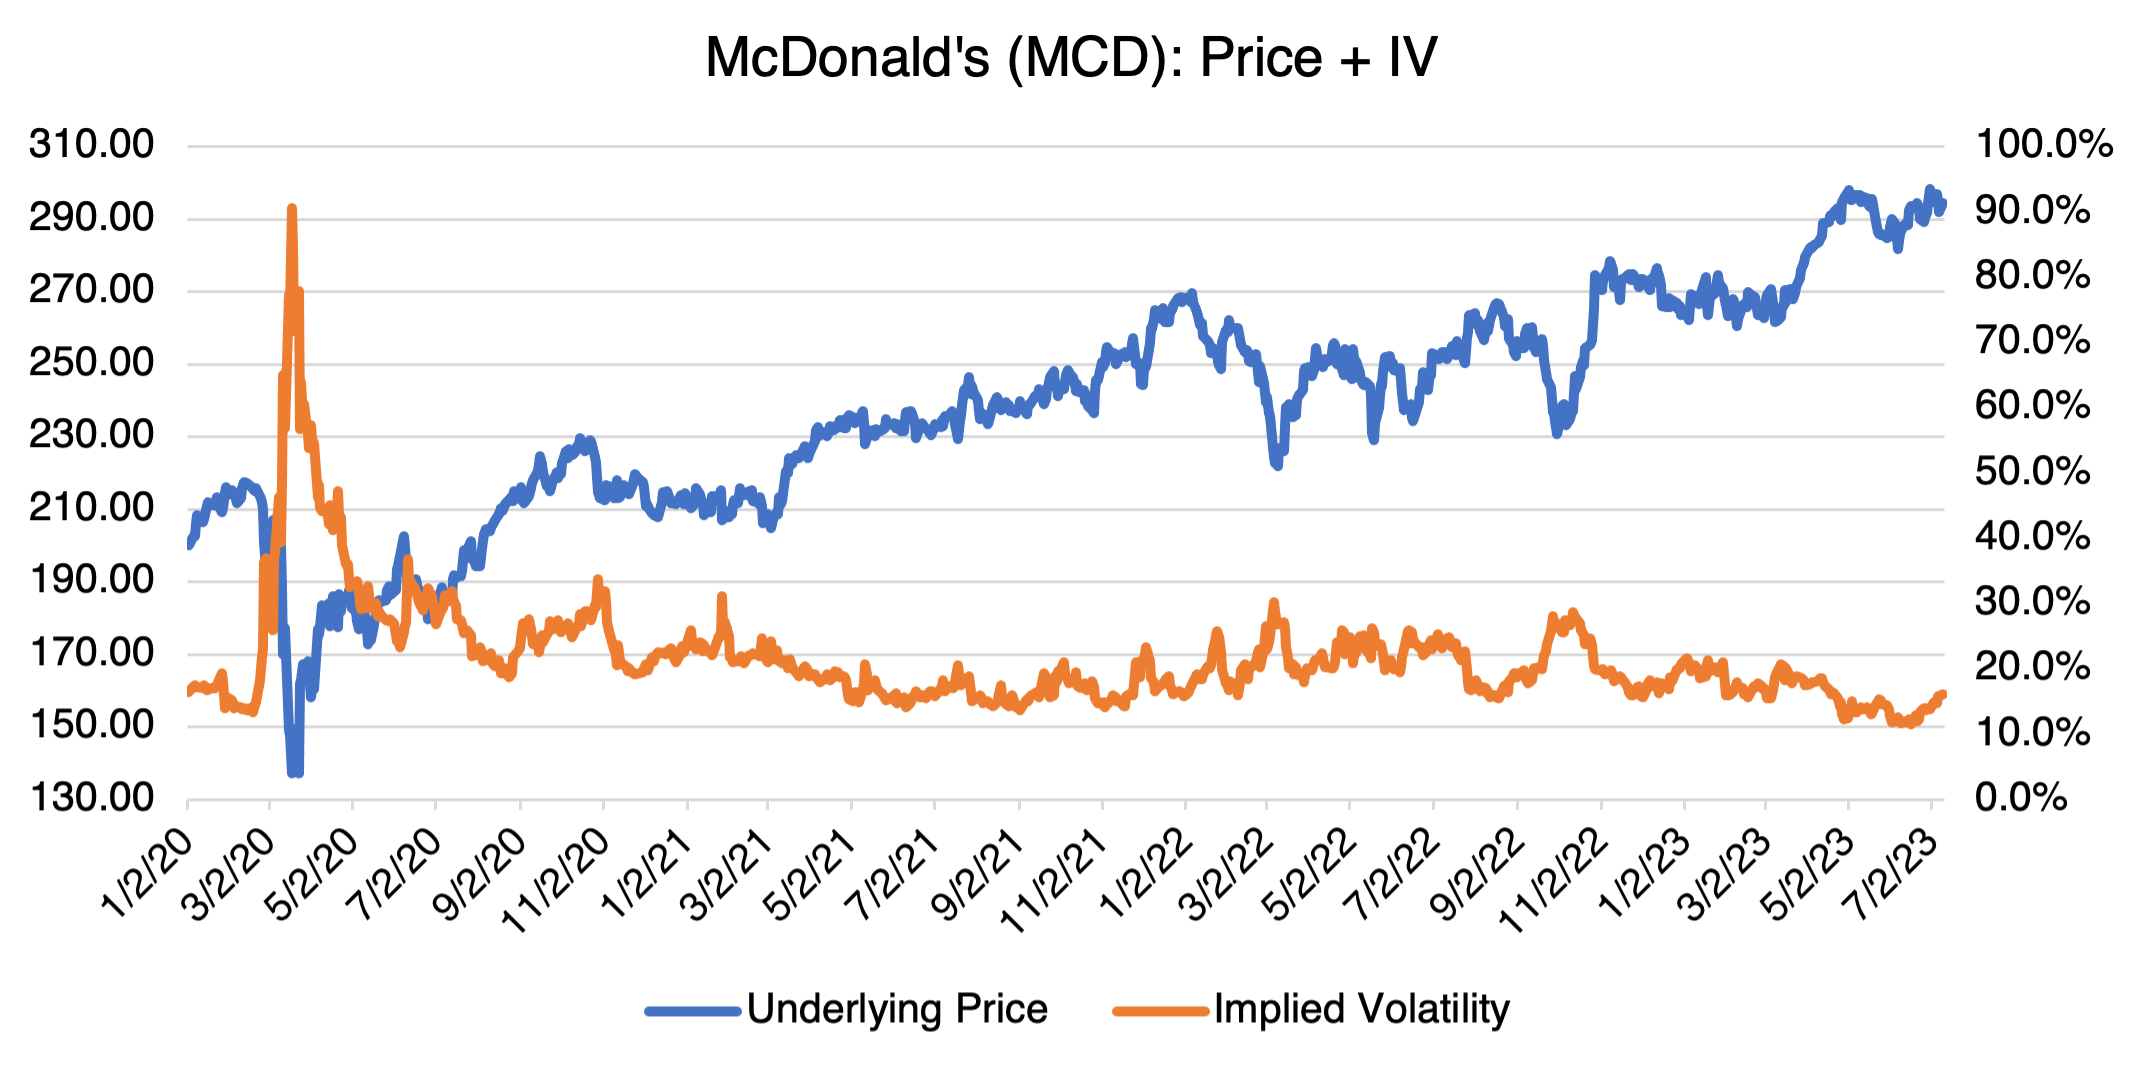 McDonald's (MCD): Price + IV